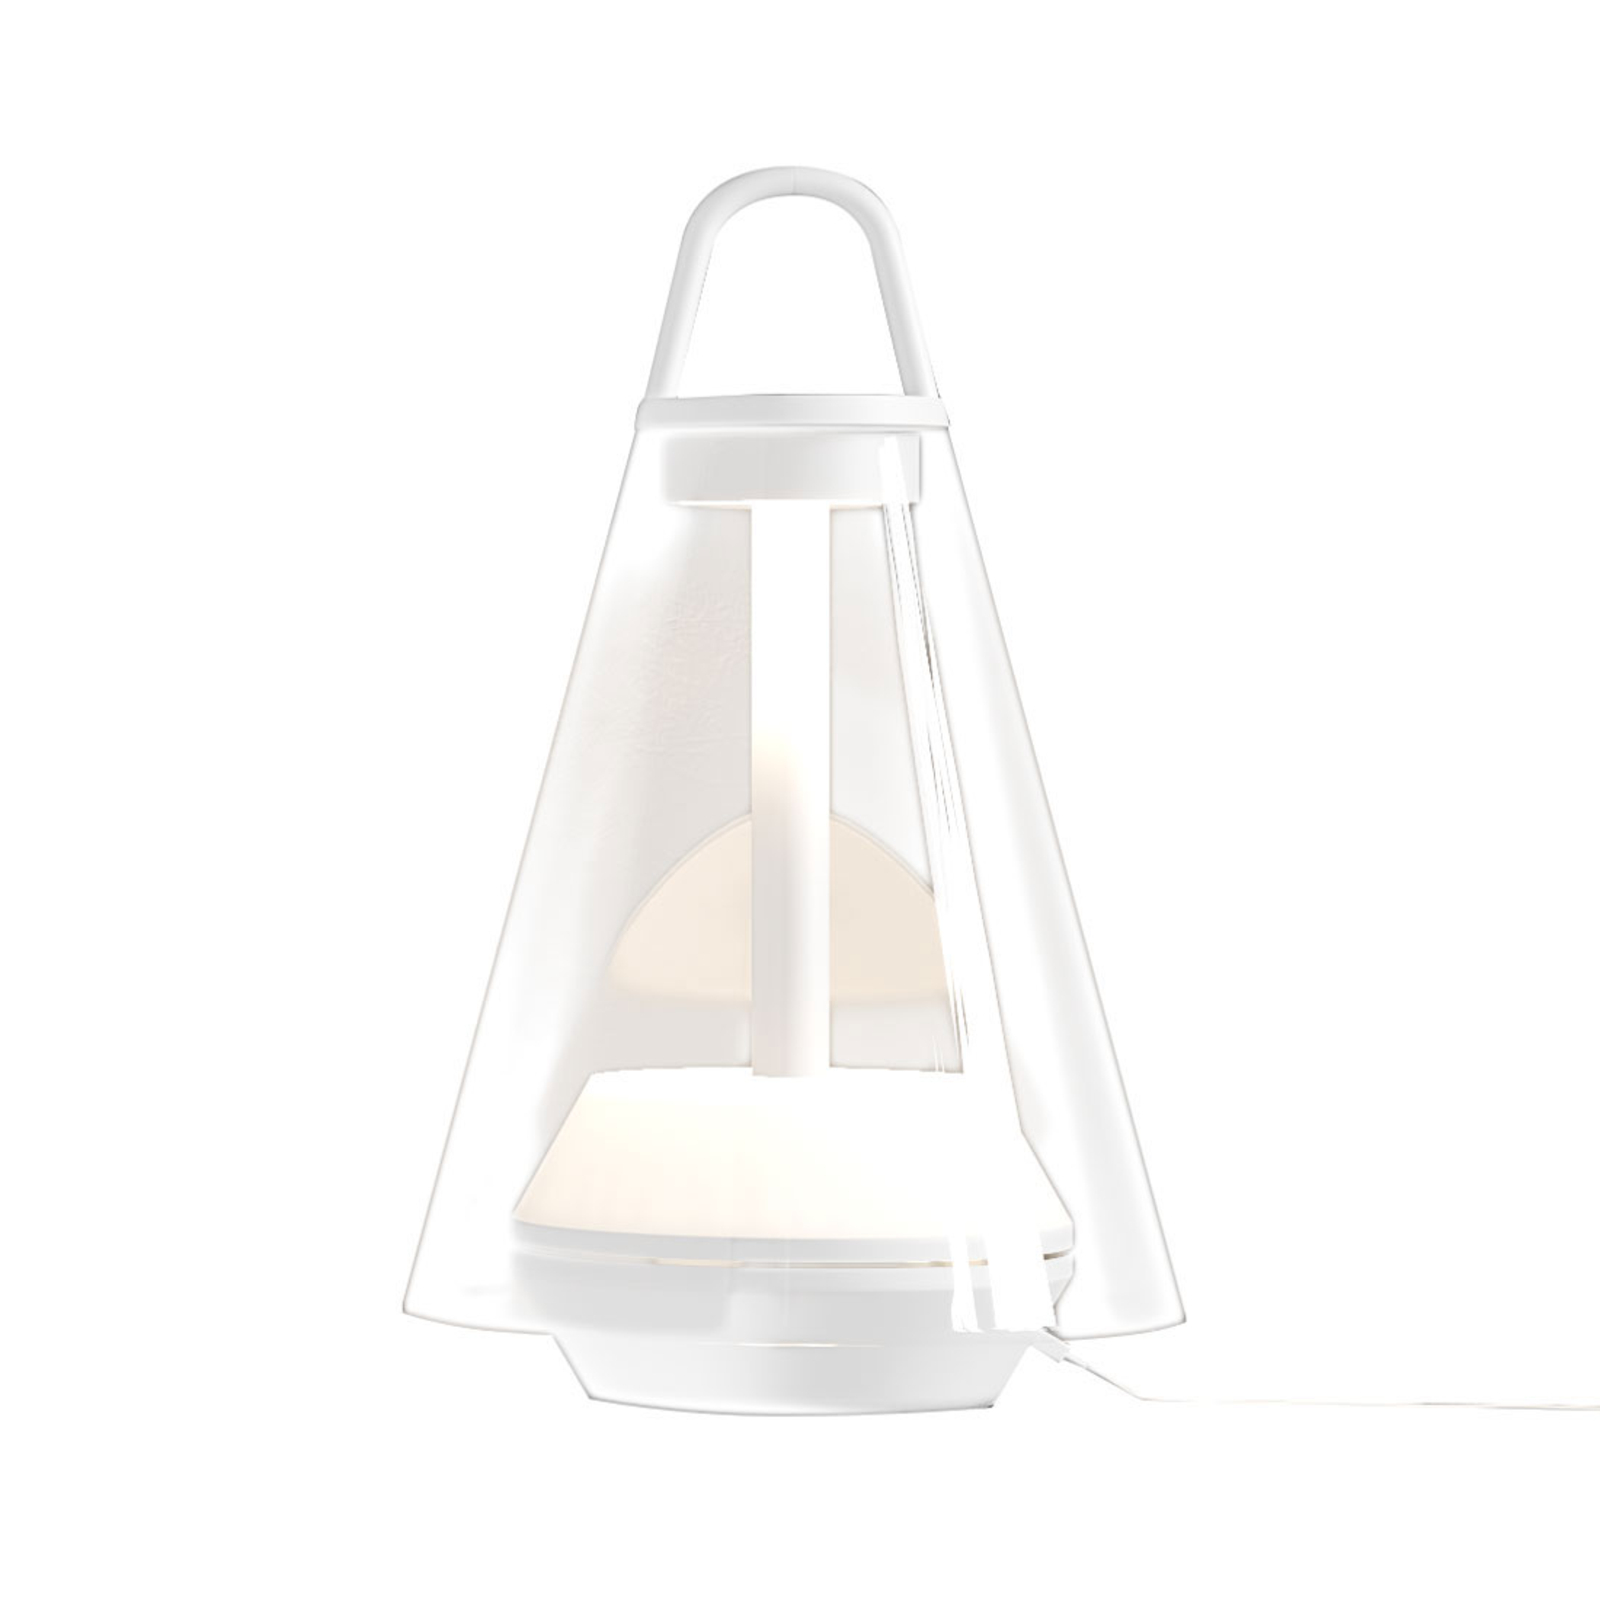 Prandina Shuttle bordlampe, hvid, klart glas